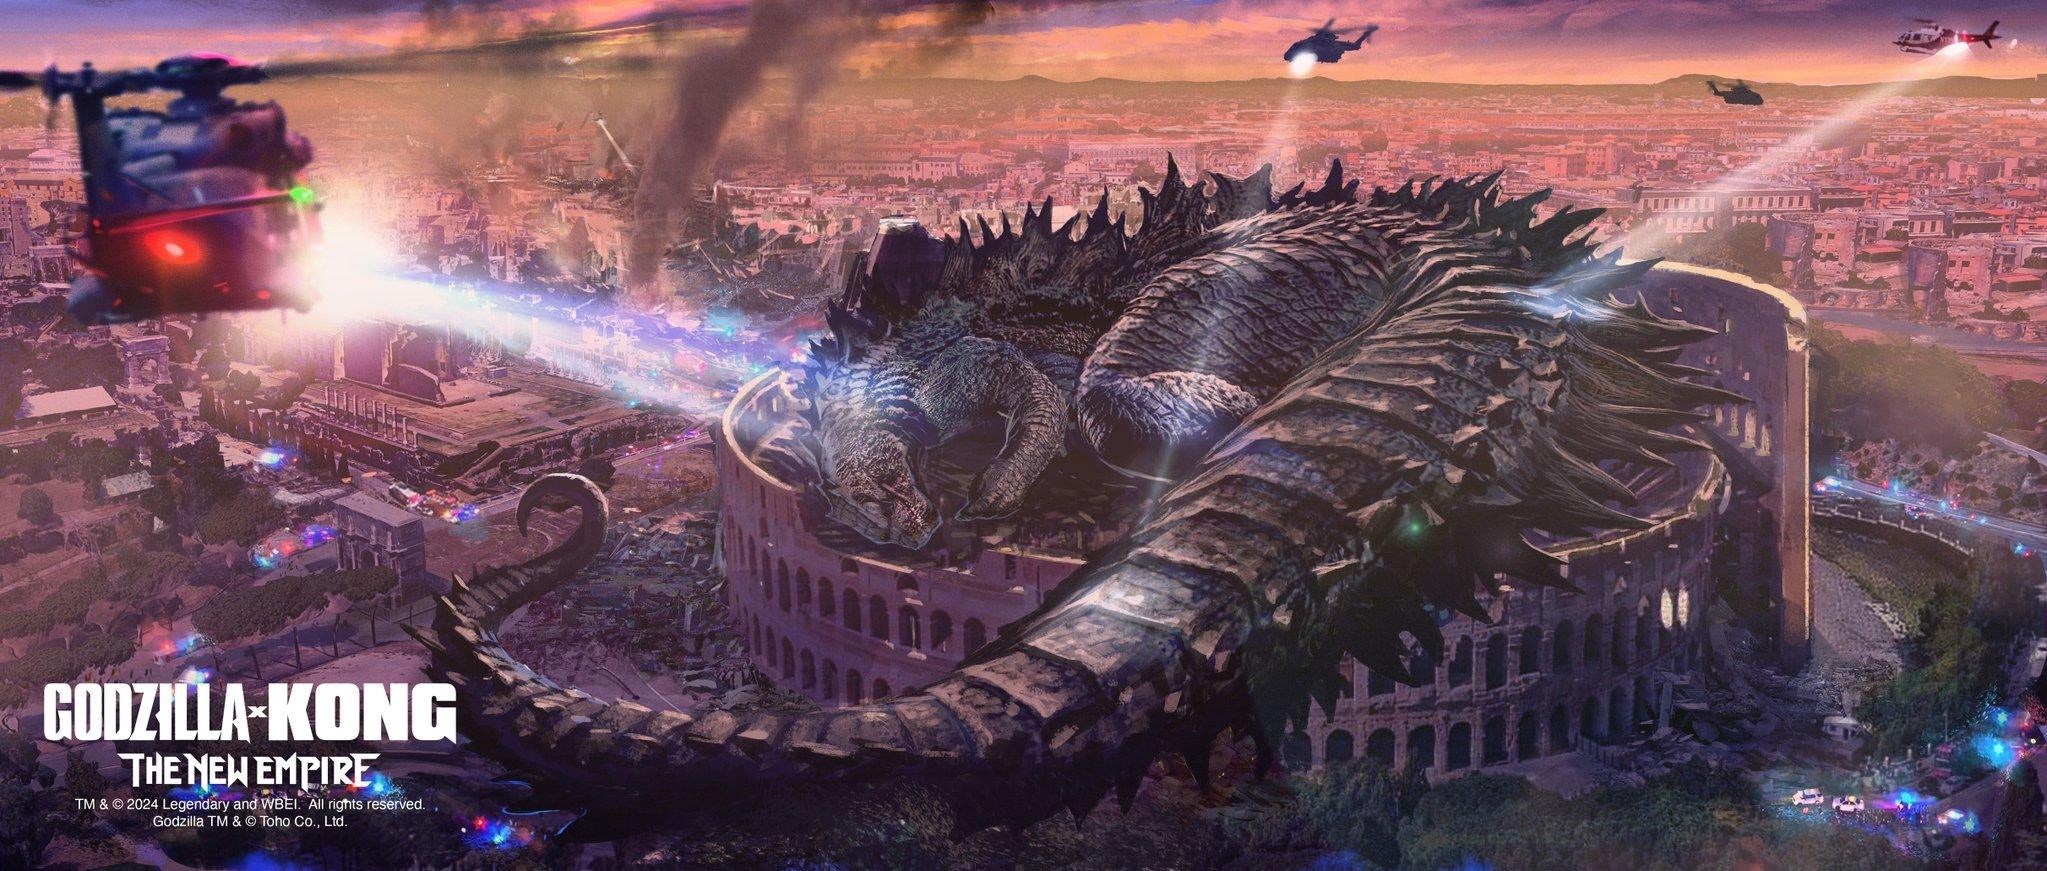 Godzilla x Kong Concept Art Turns the Kaiju Into a Cat